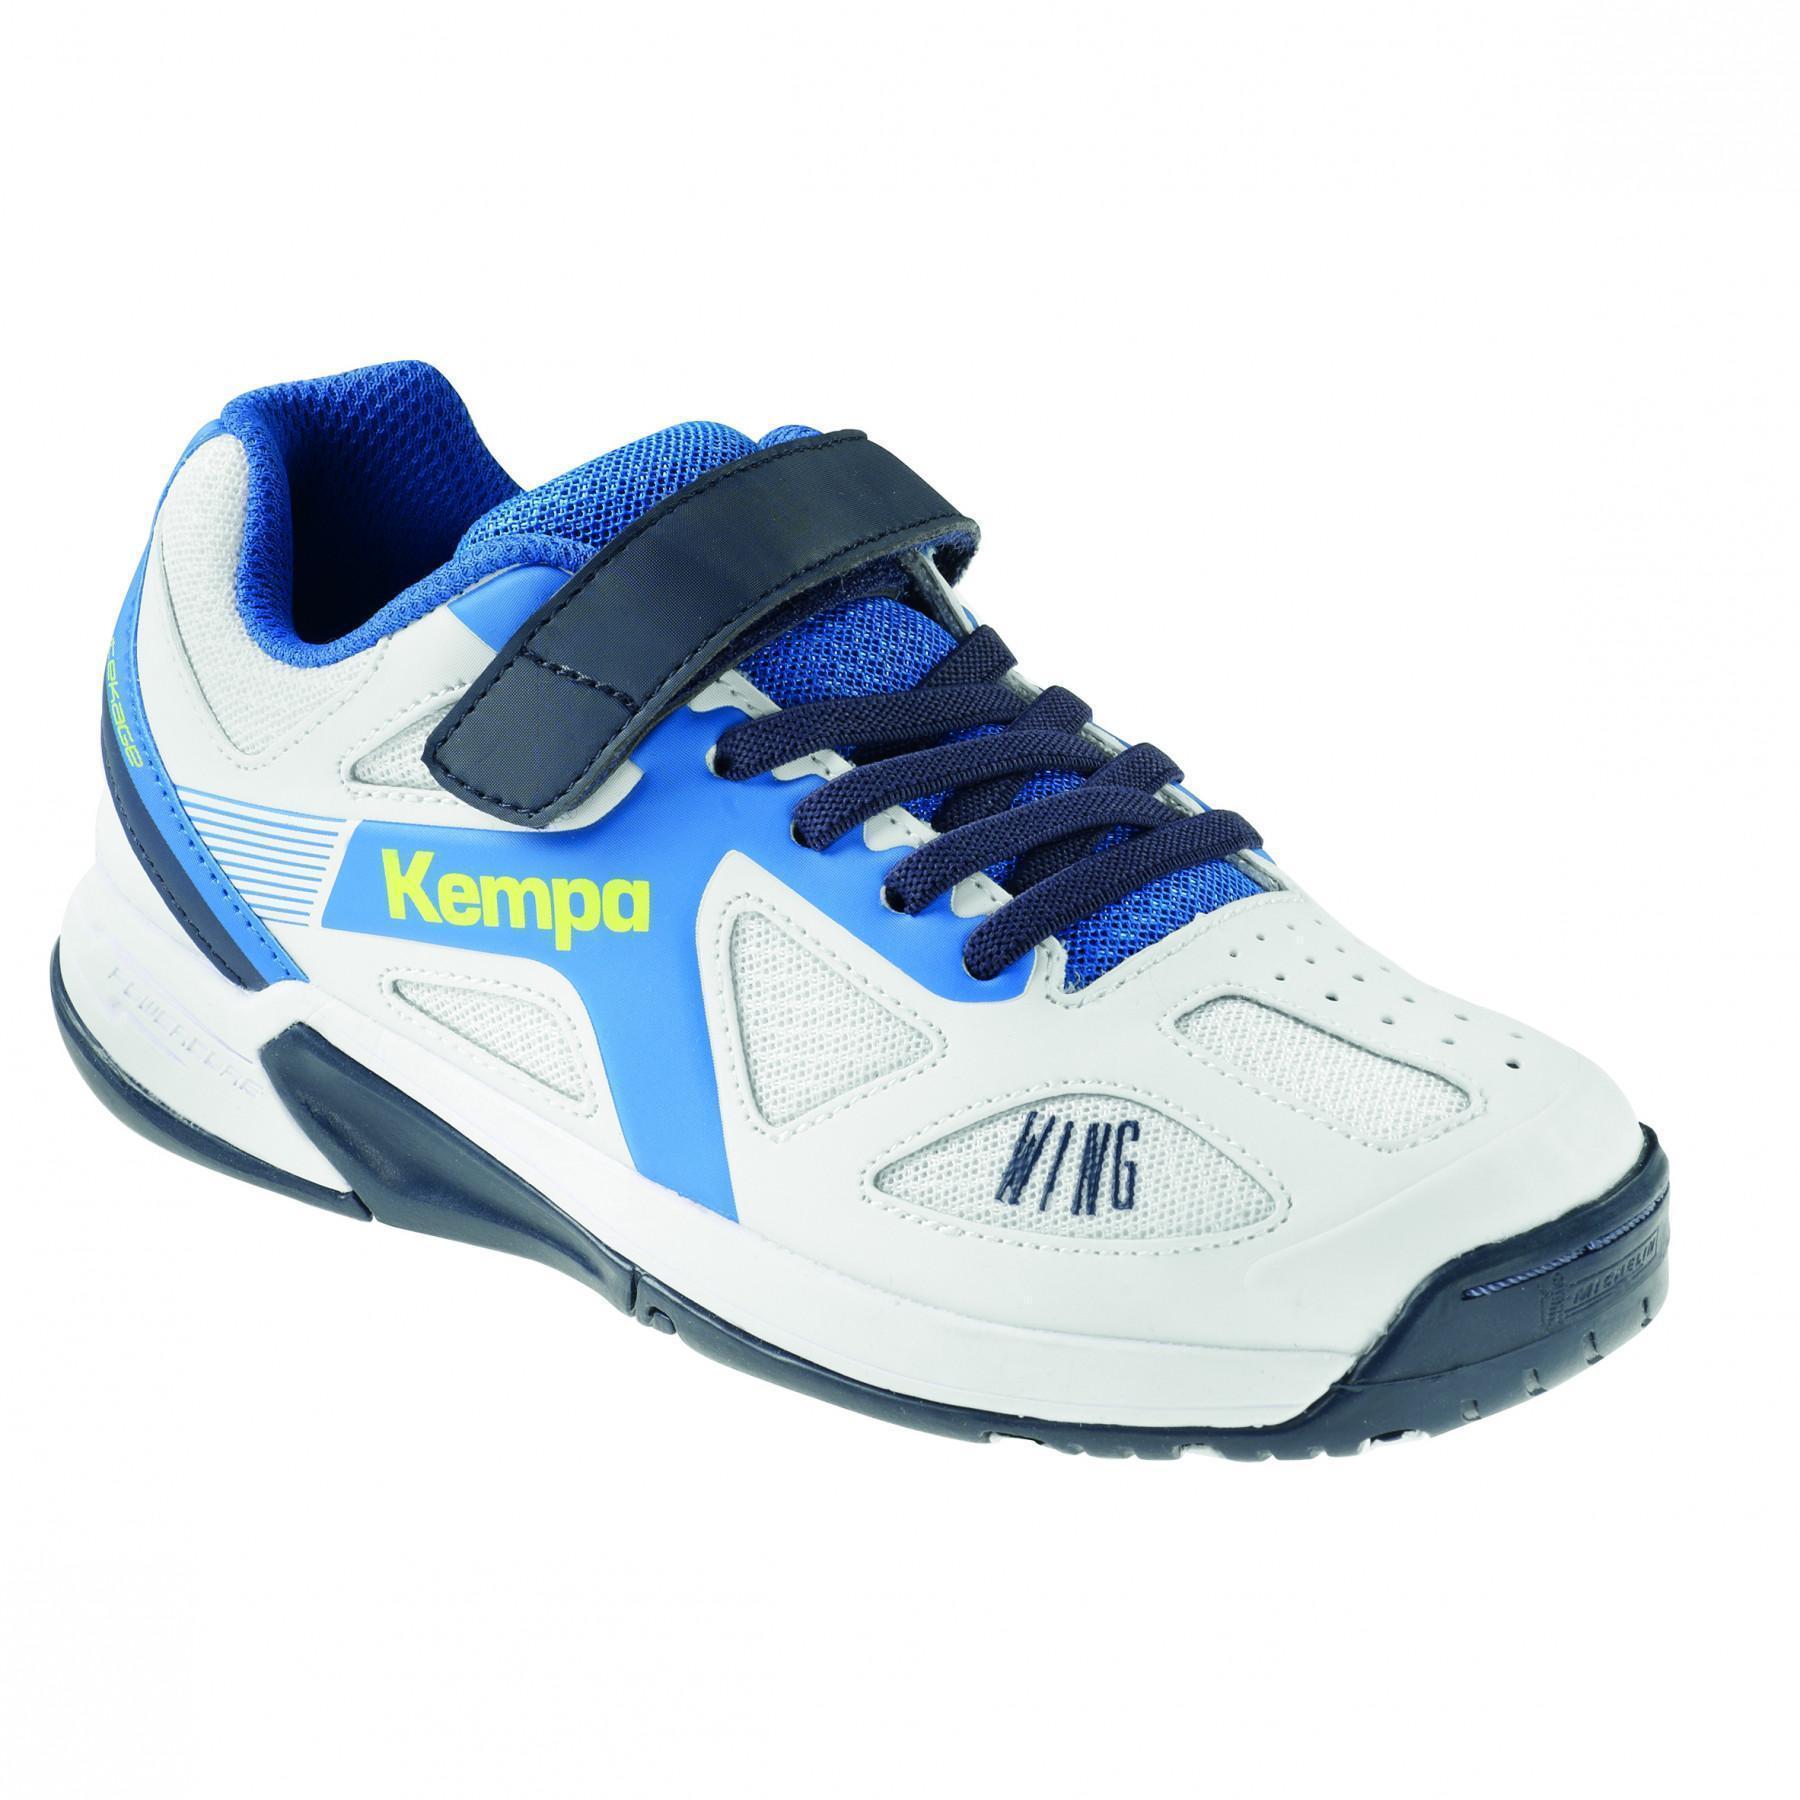 Buty dziecięce Kempa Wing